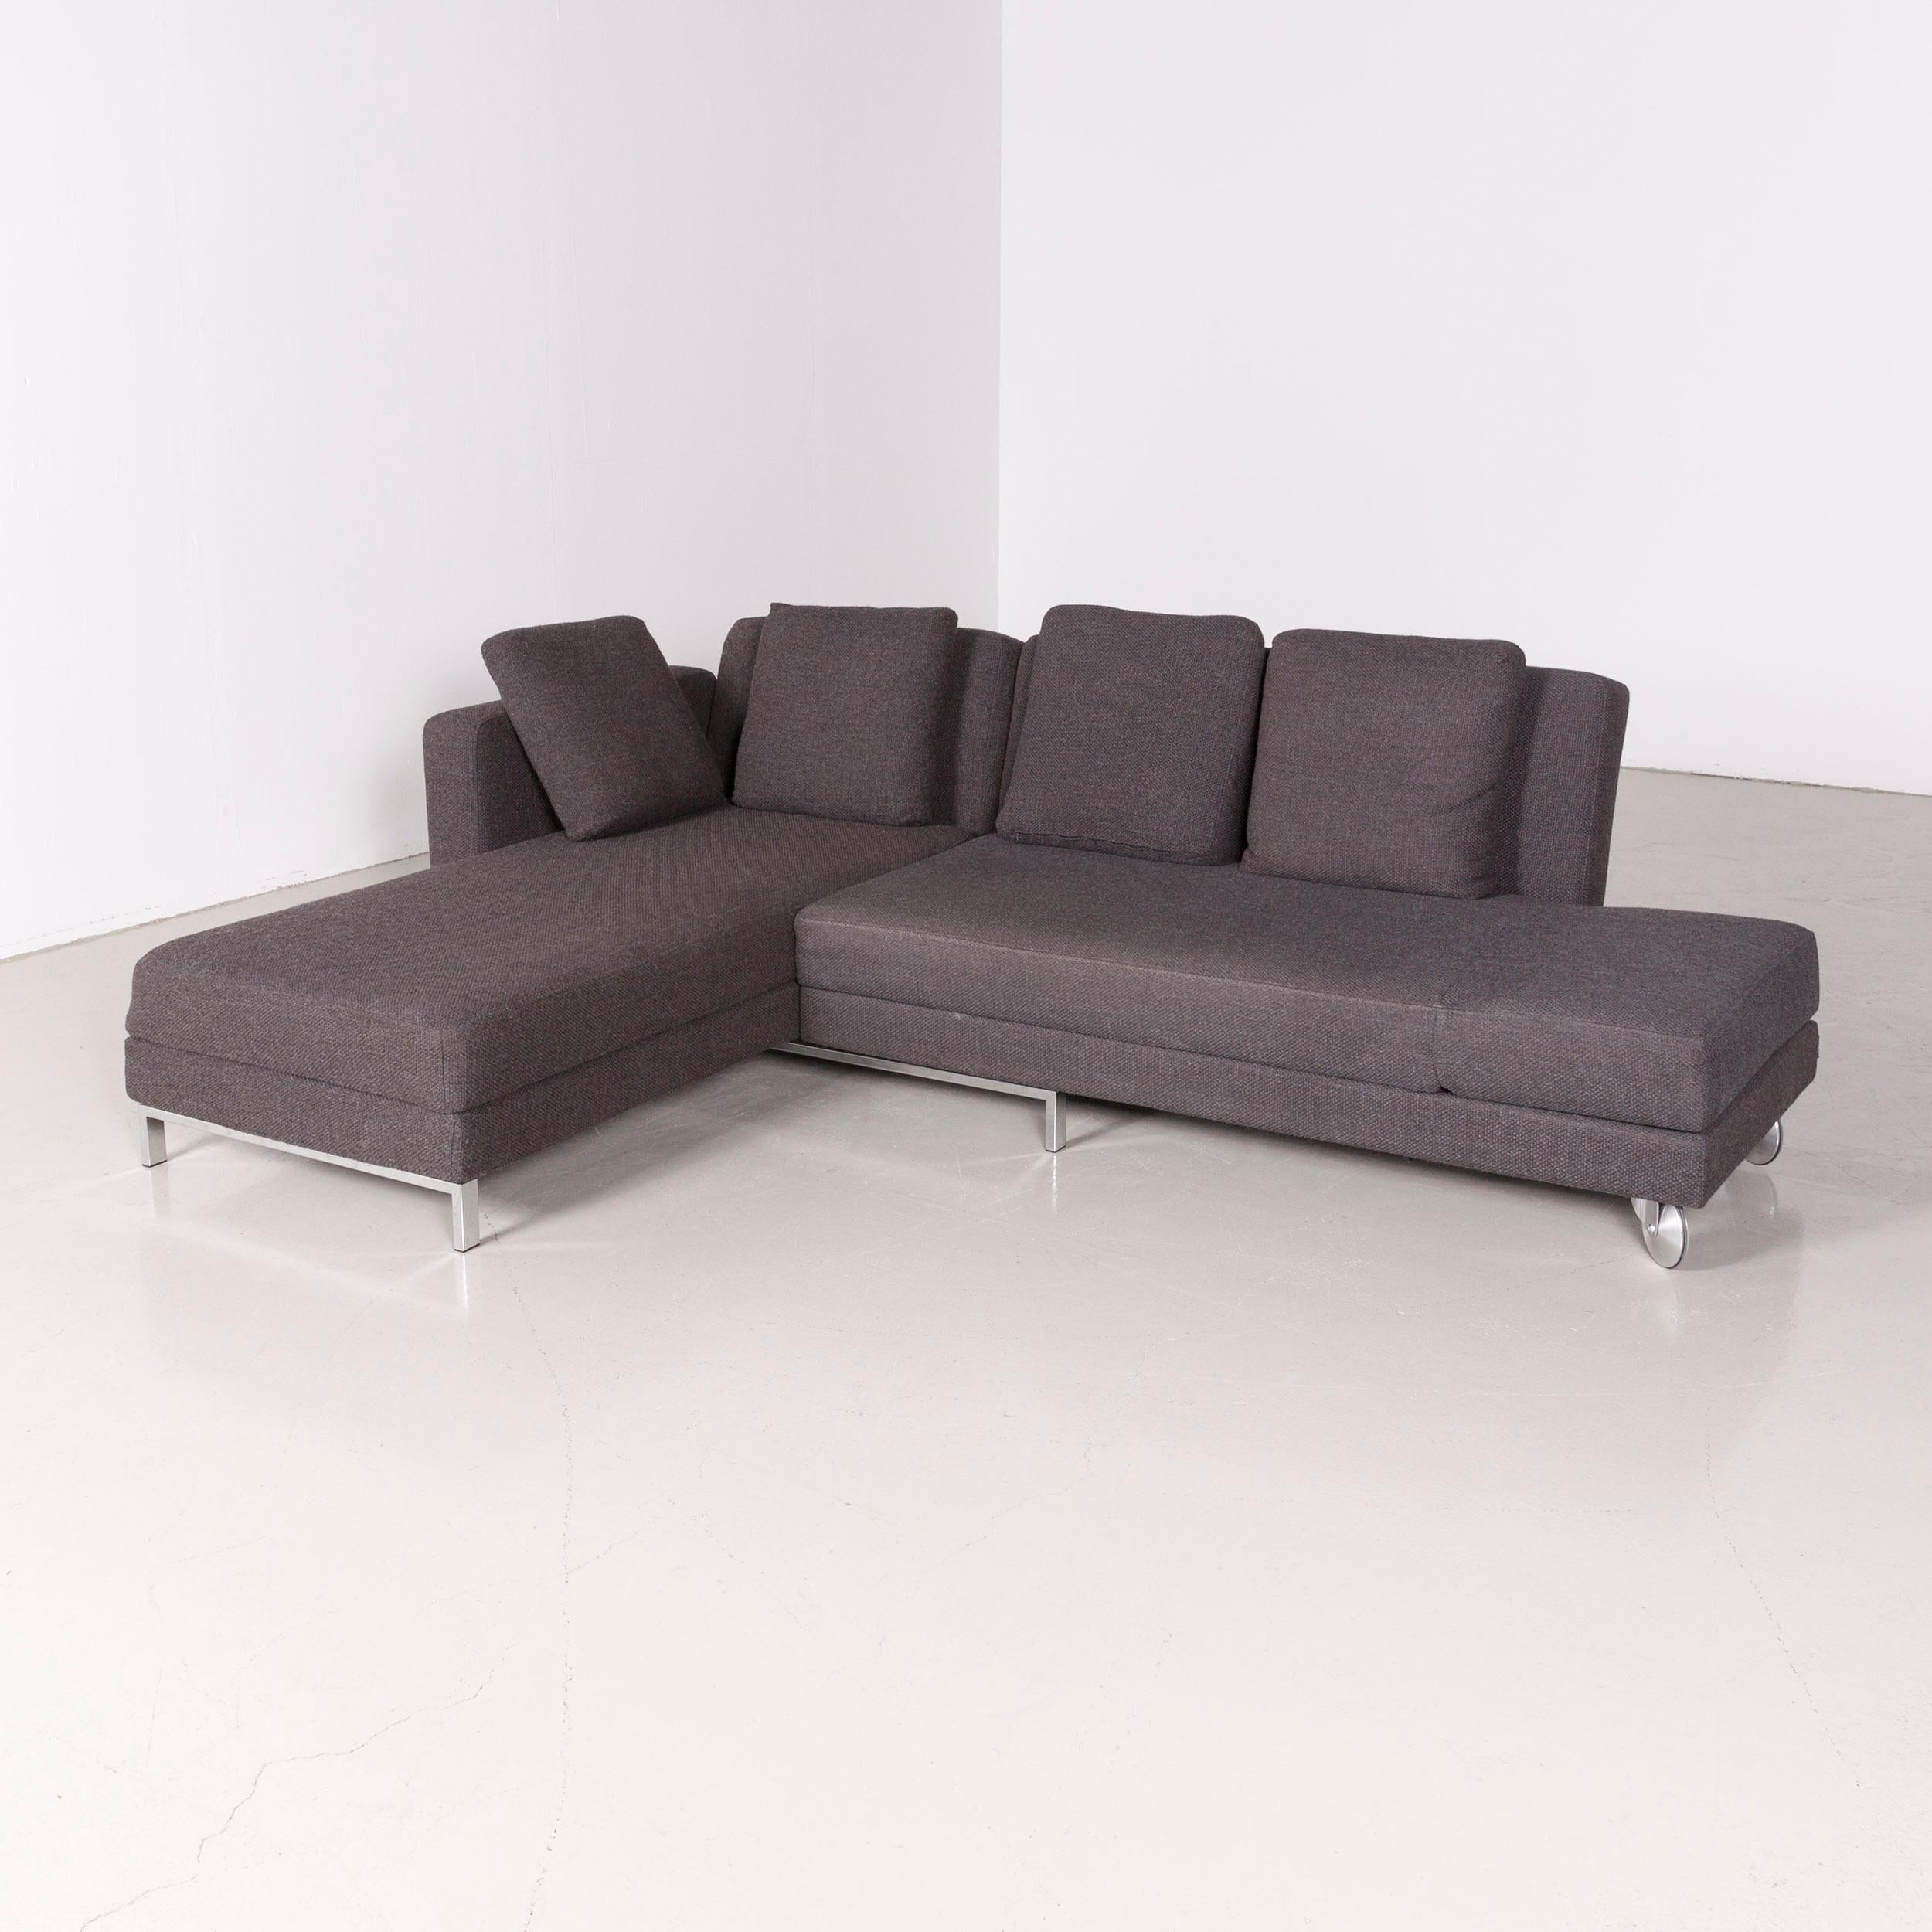 Brühl & Sippold Moule designer corner-sofa grey fabric.